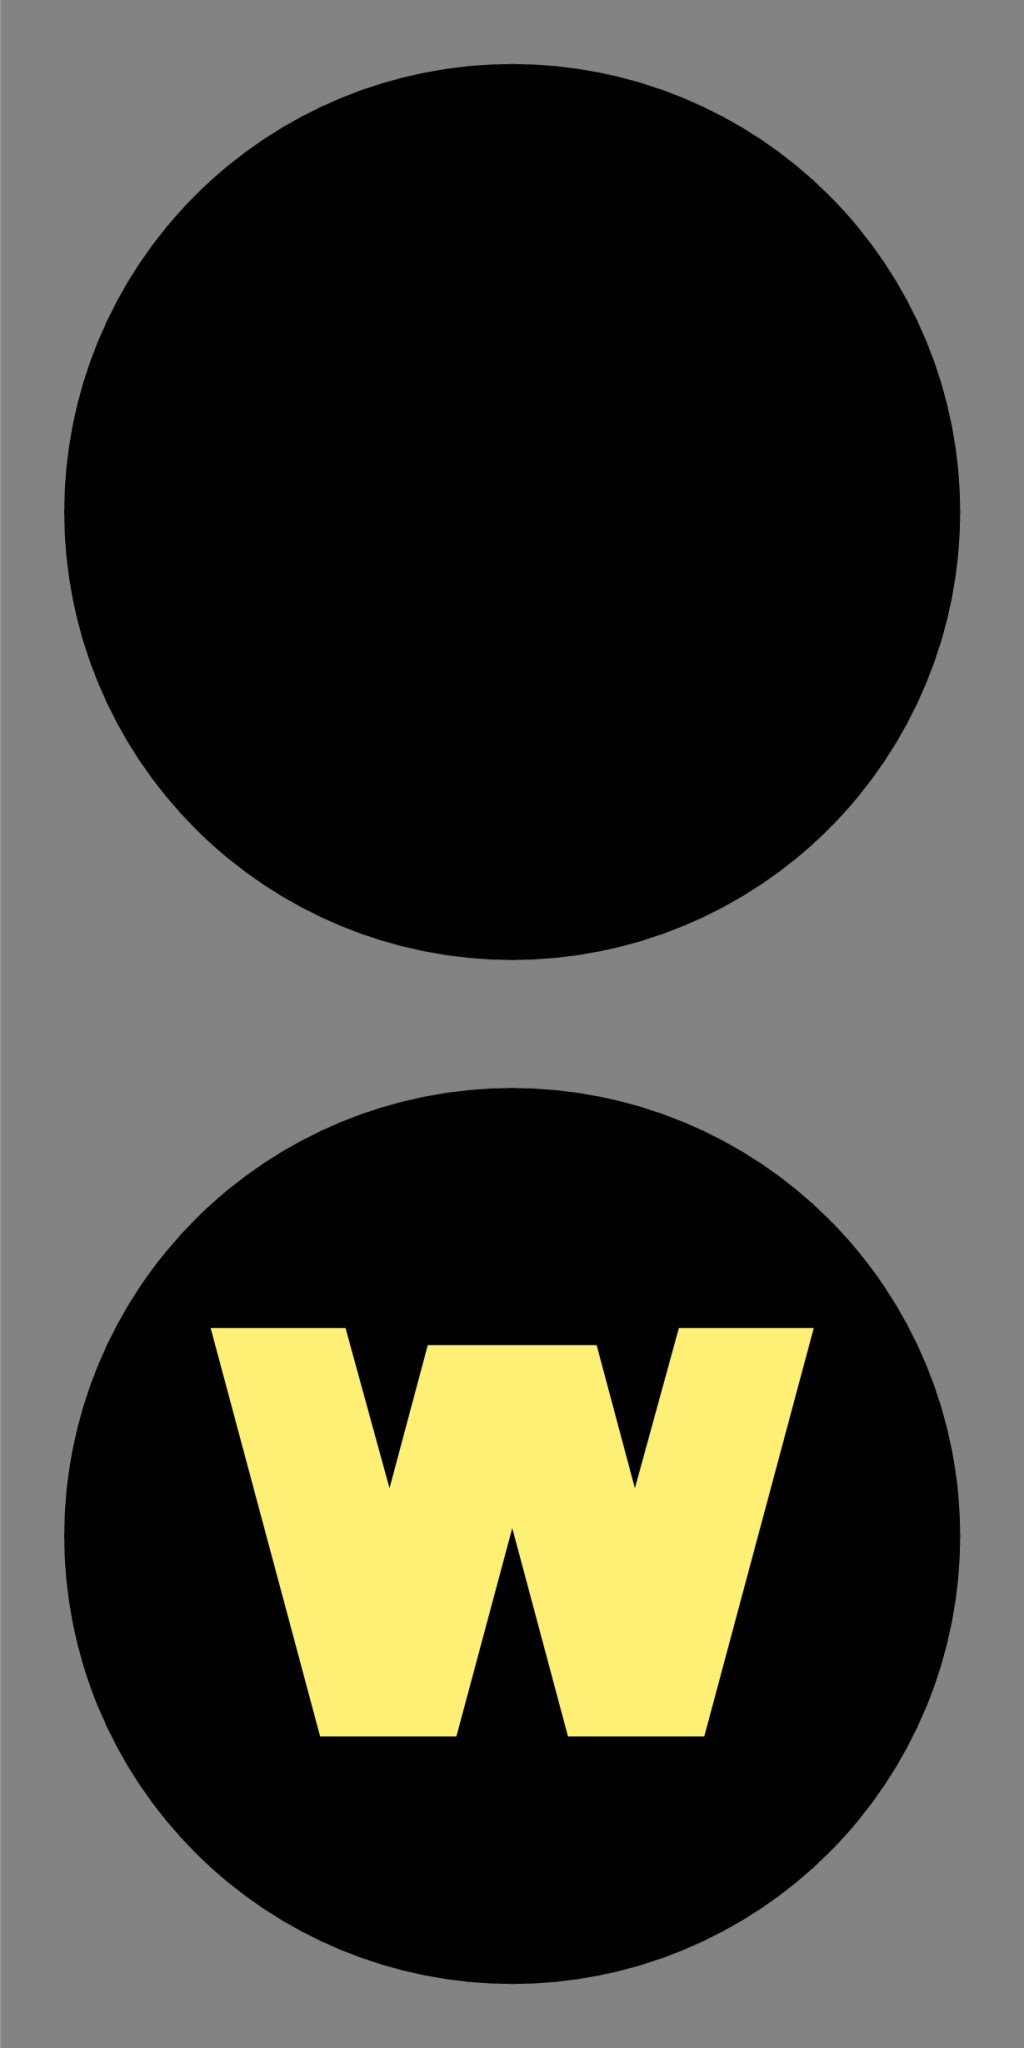 Wv1 icon